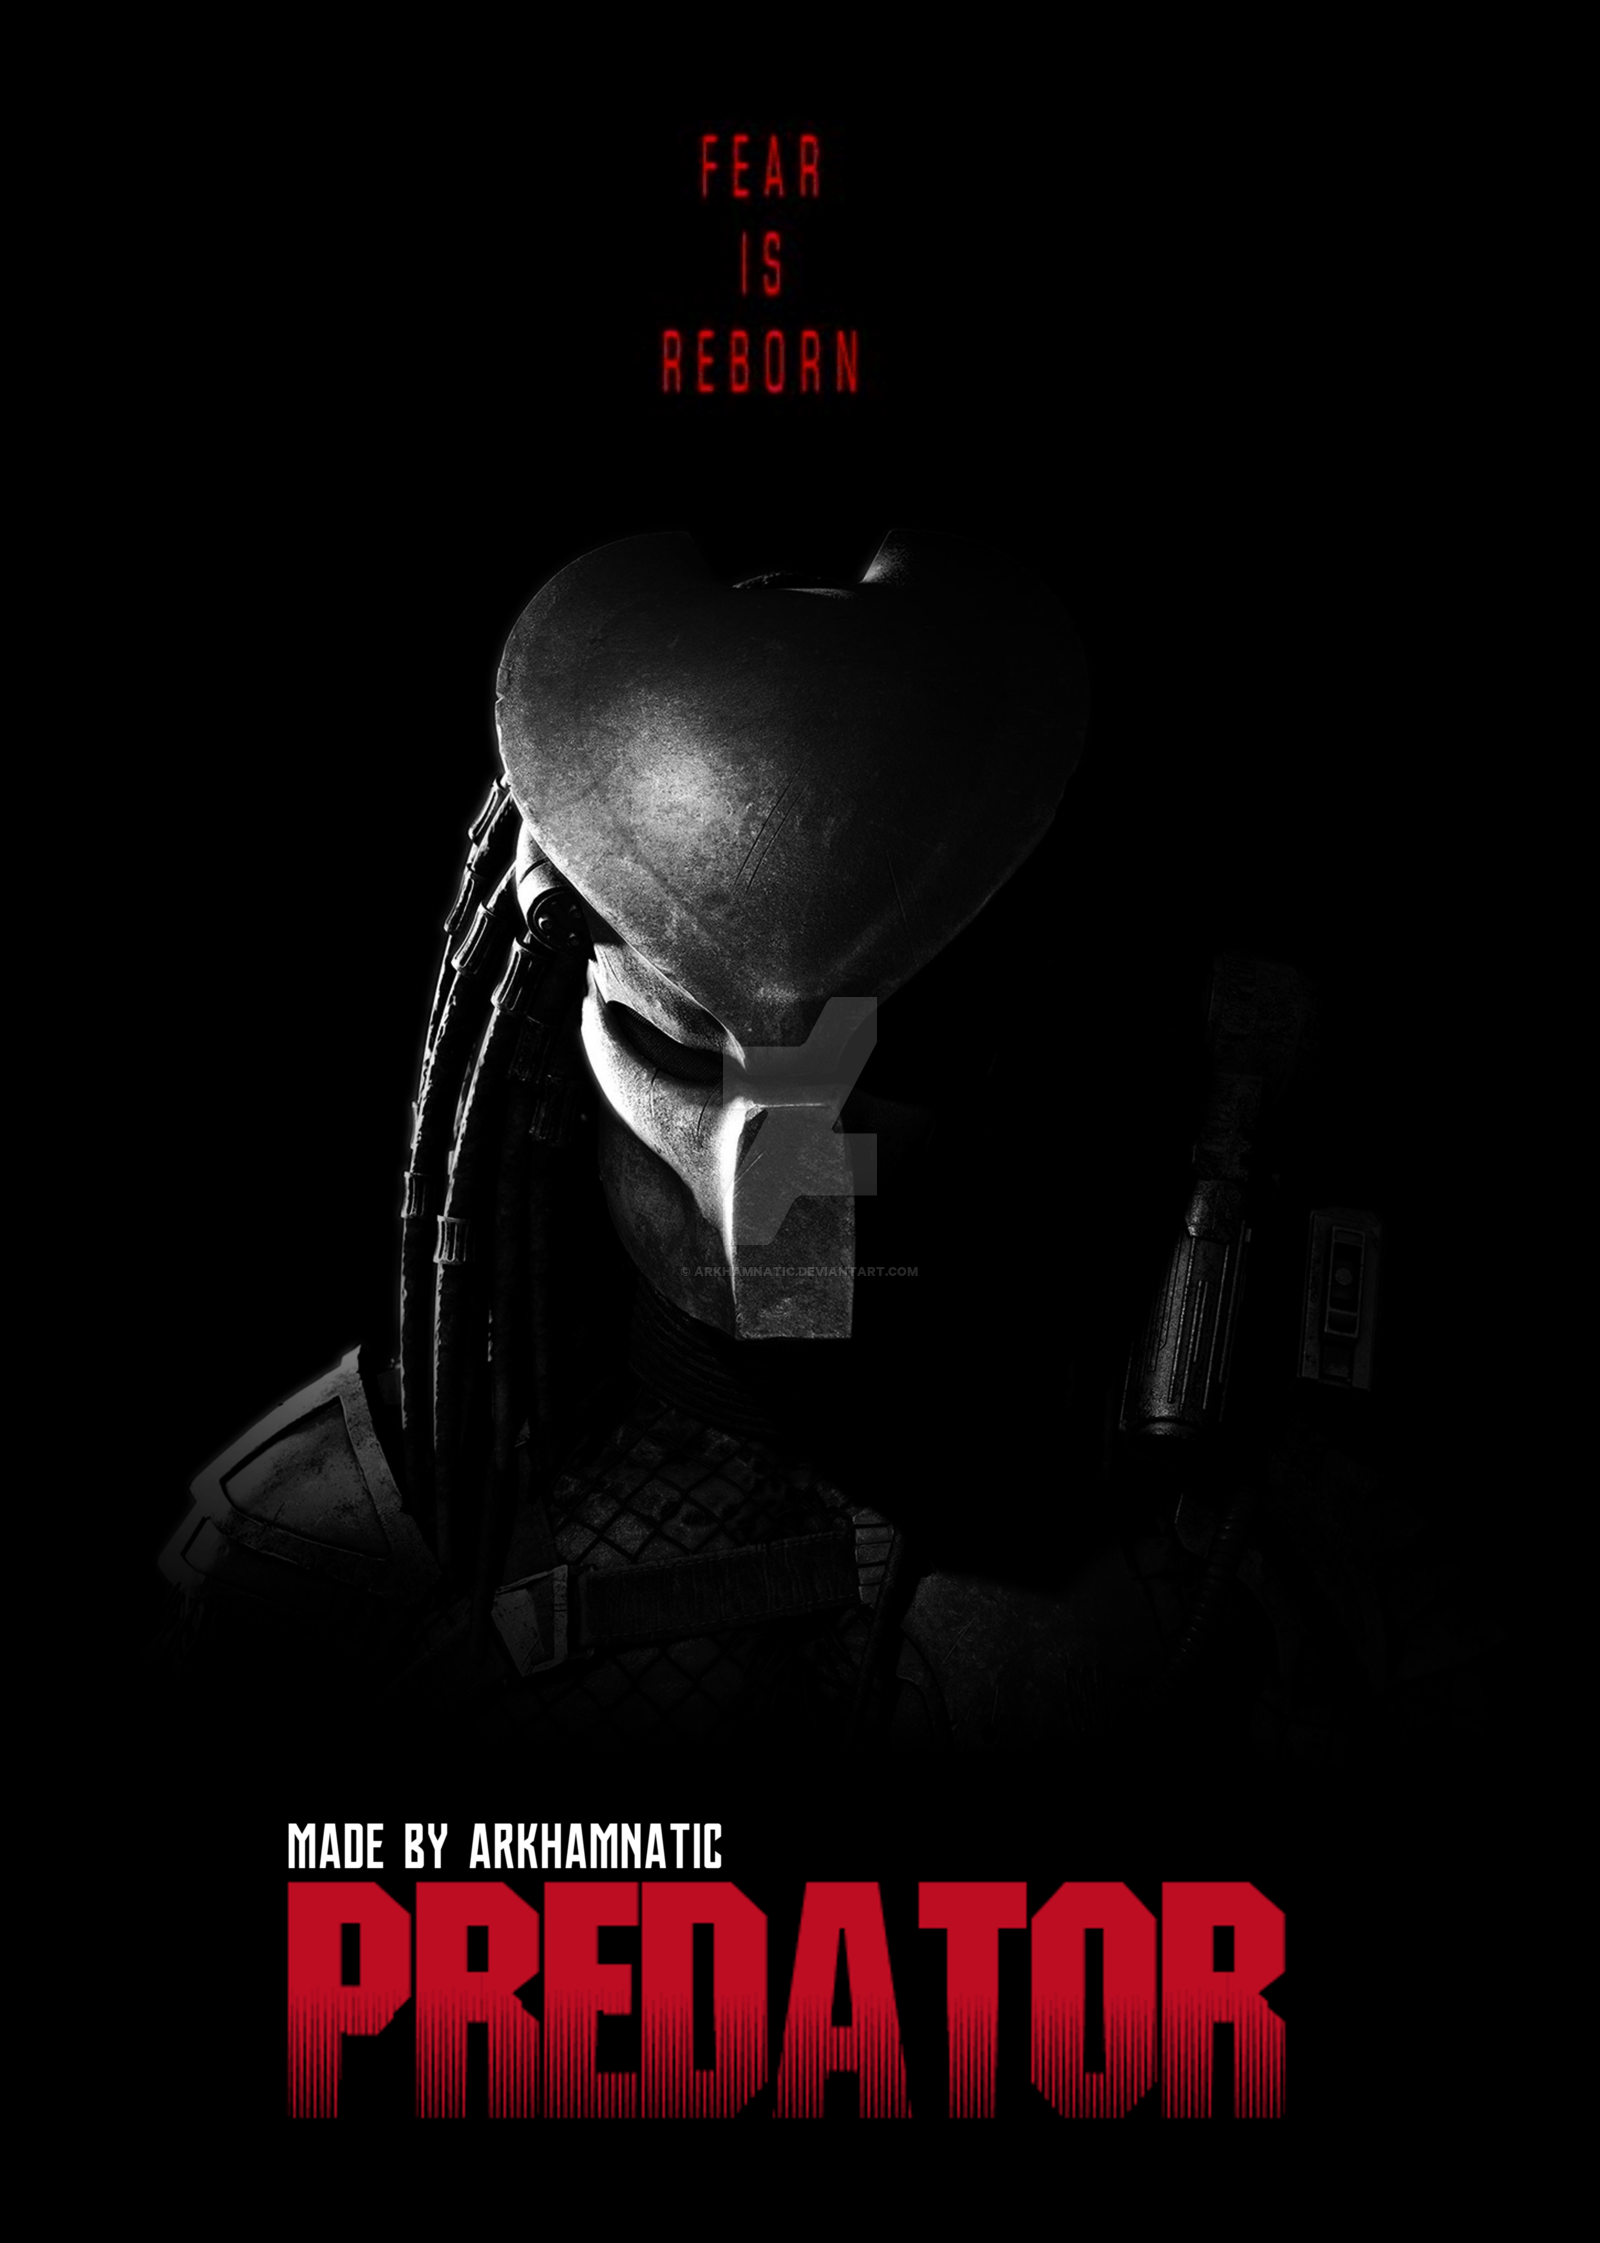 The Predator movie poster (2018)